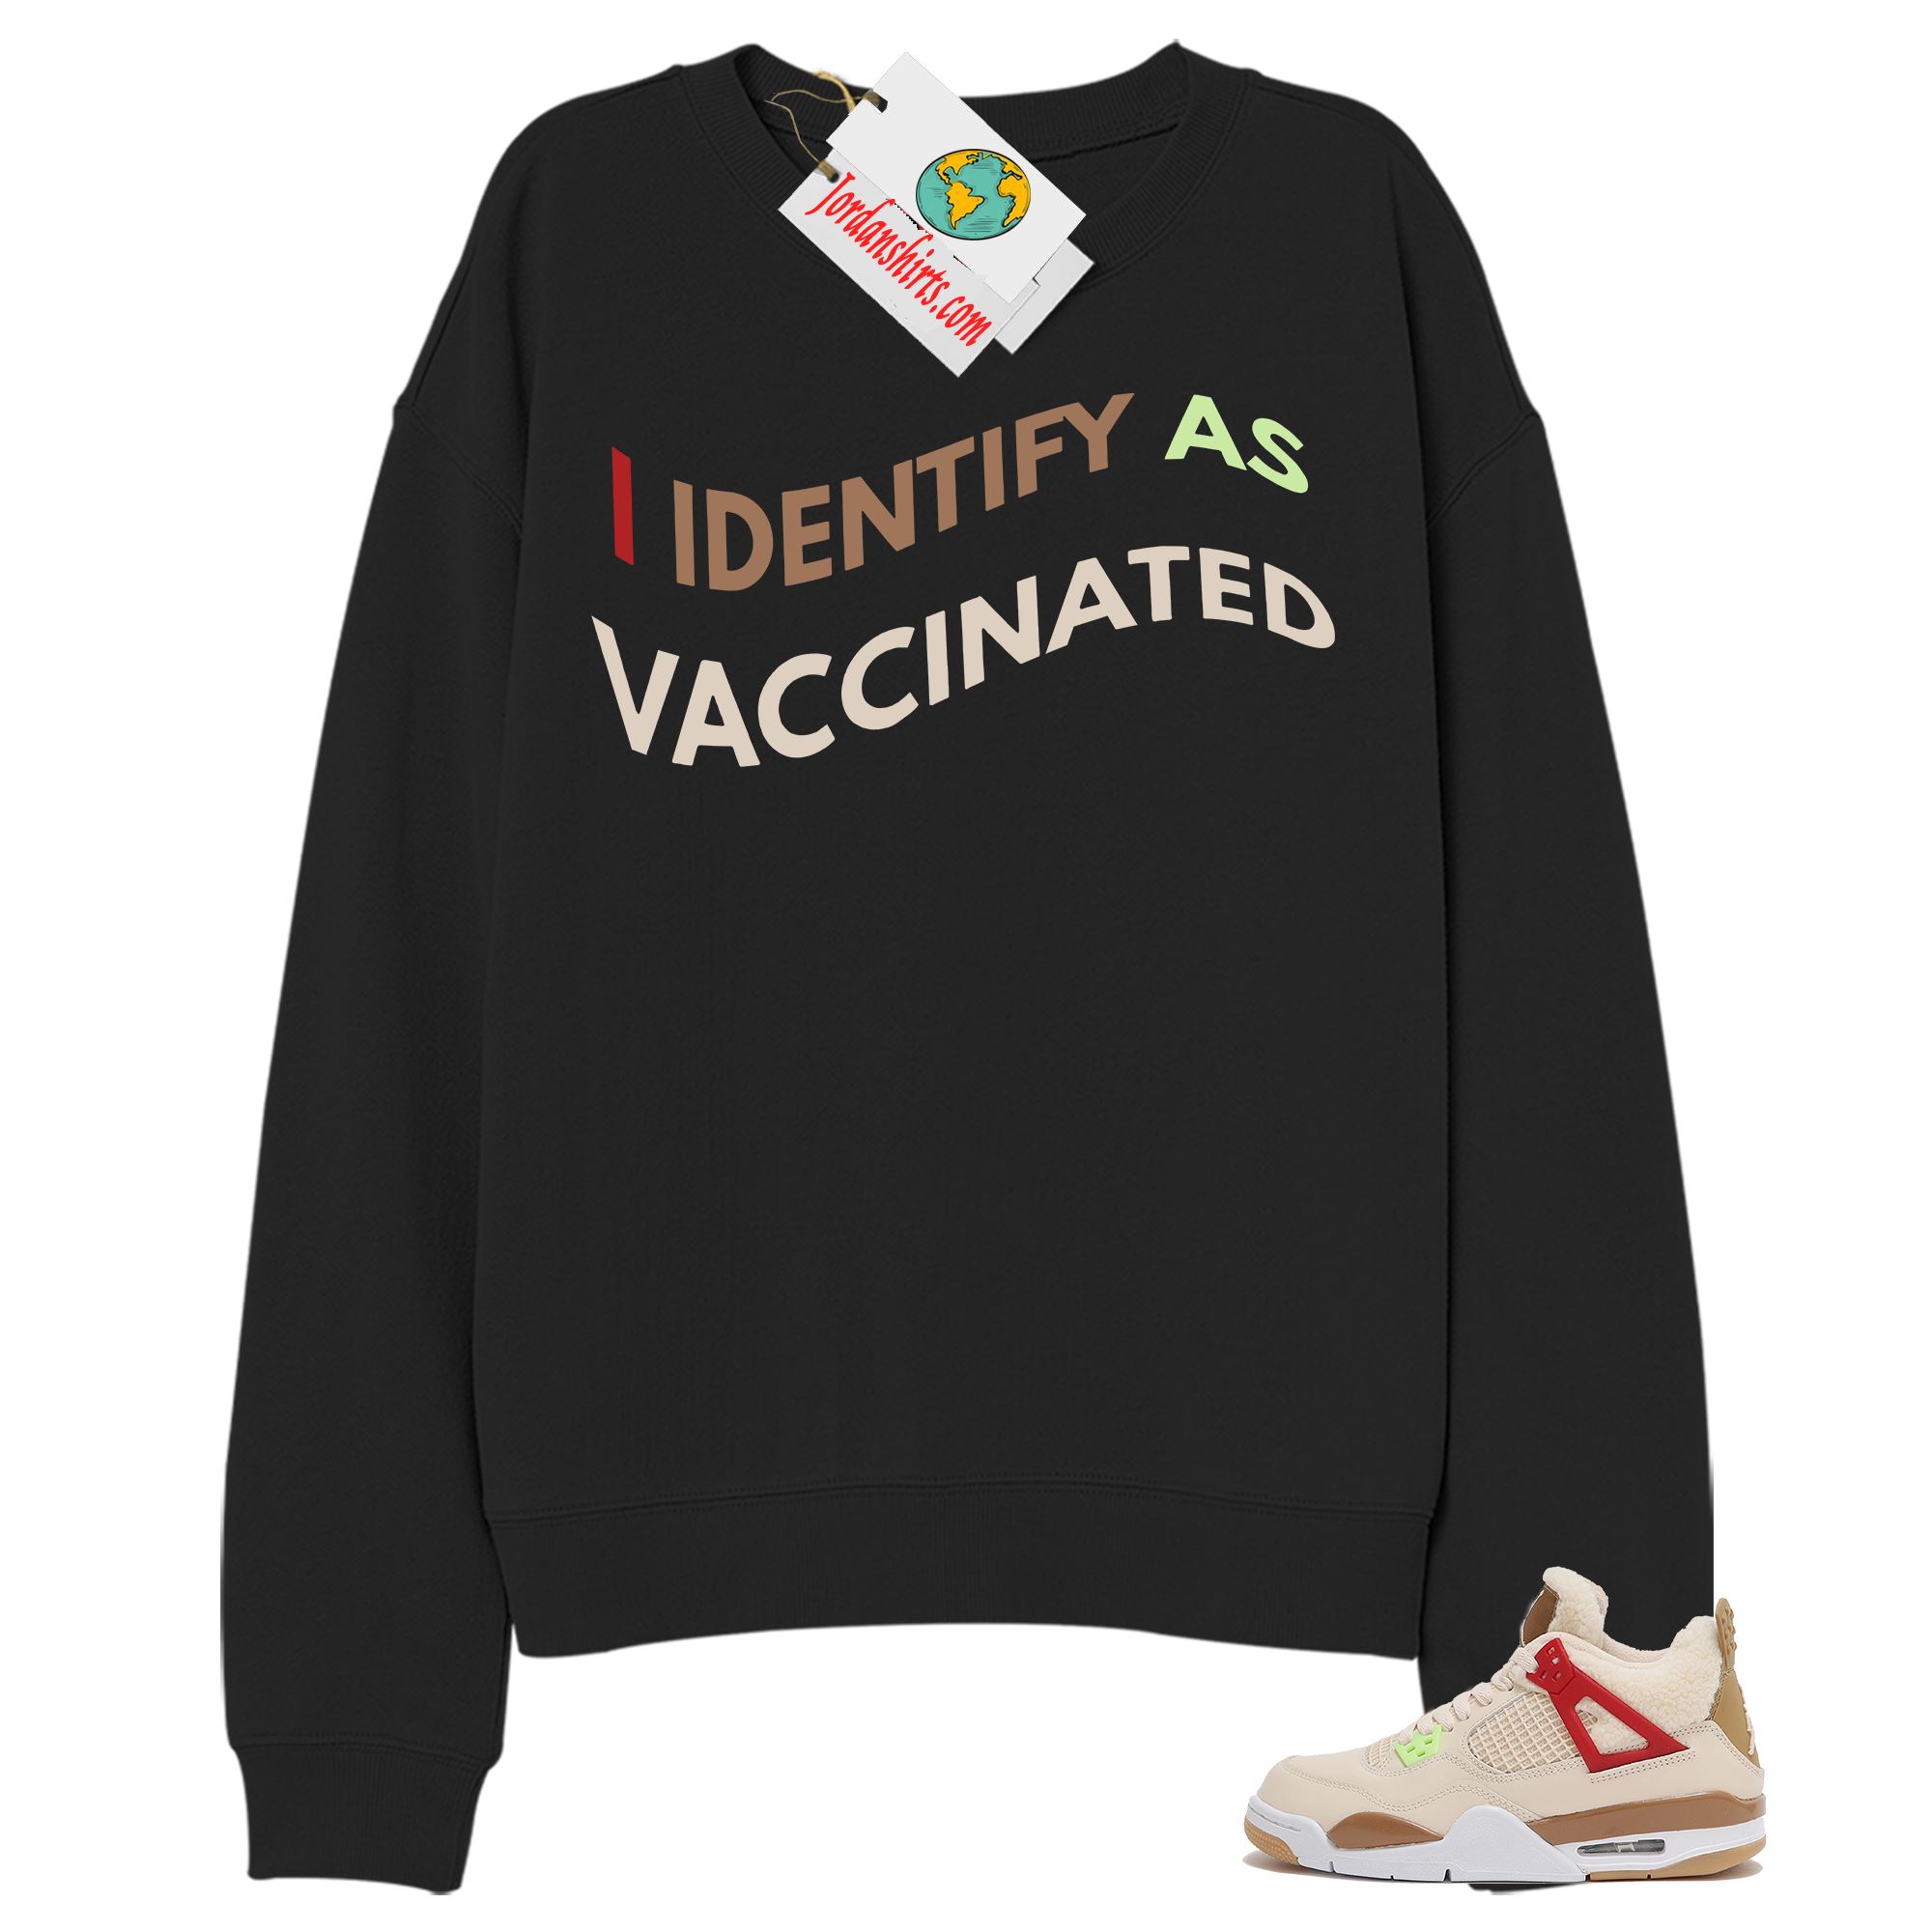 Jordan 4 Sweatshirt, I Identify As Vaccinated Black Sweatshirt Air Jordan 4 Wild Things 4s Size Up To 5xl